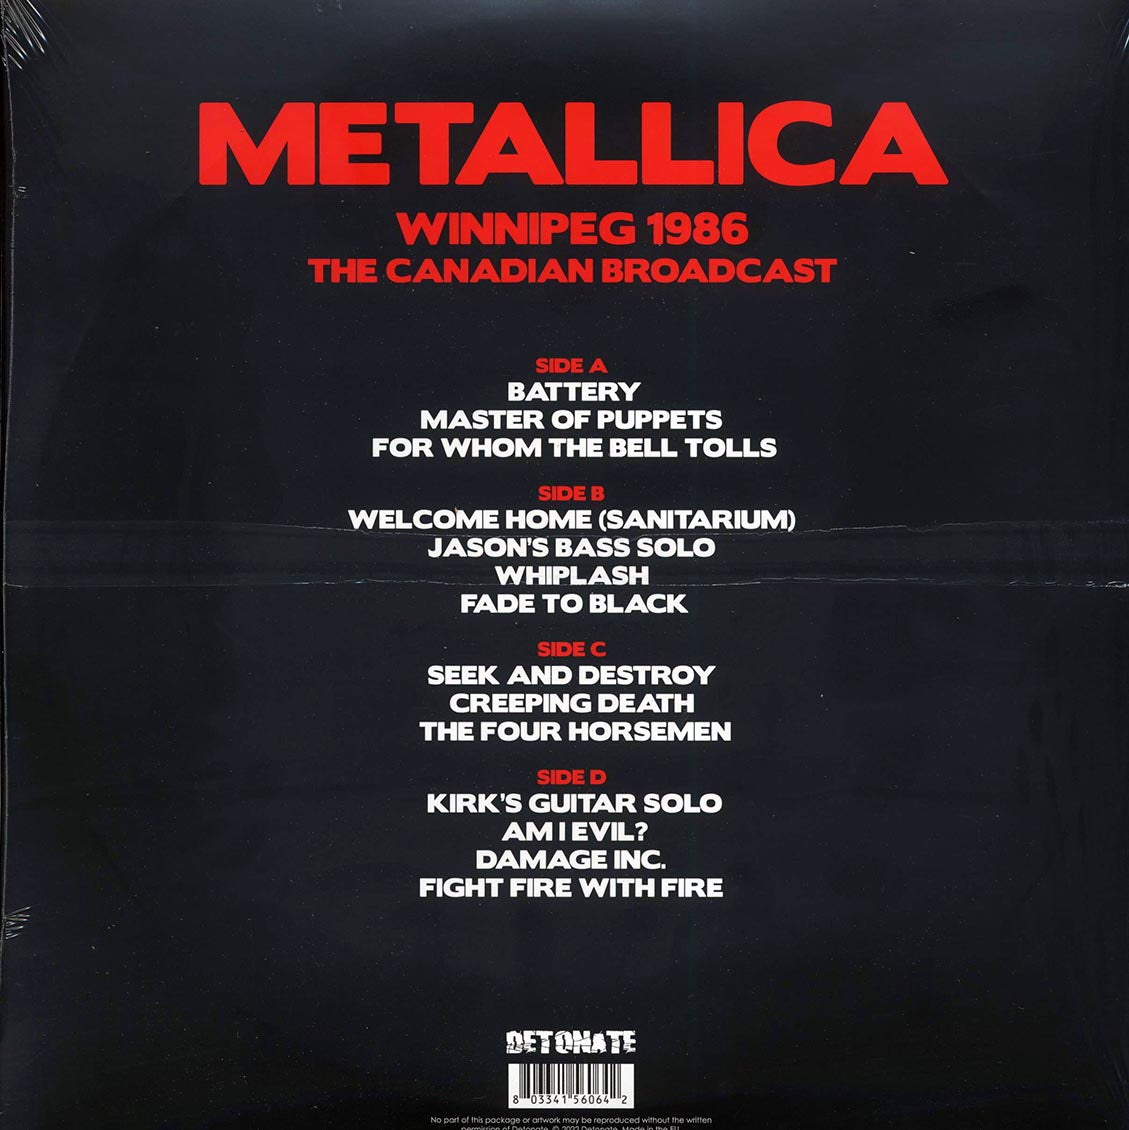 Metallica - Winnipeg 1986: The Canadian Broadcast (ltd. ed.) (2xLP) (red vinyl) - Vinyl LP, LP